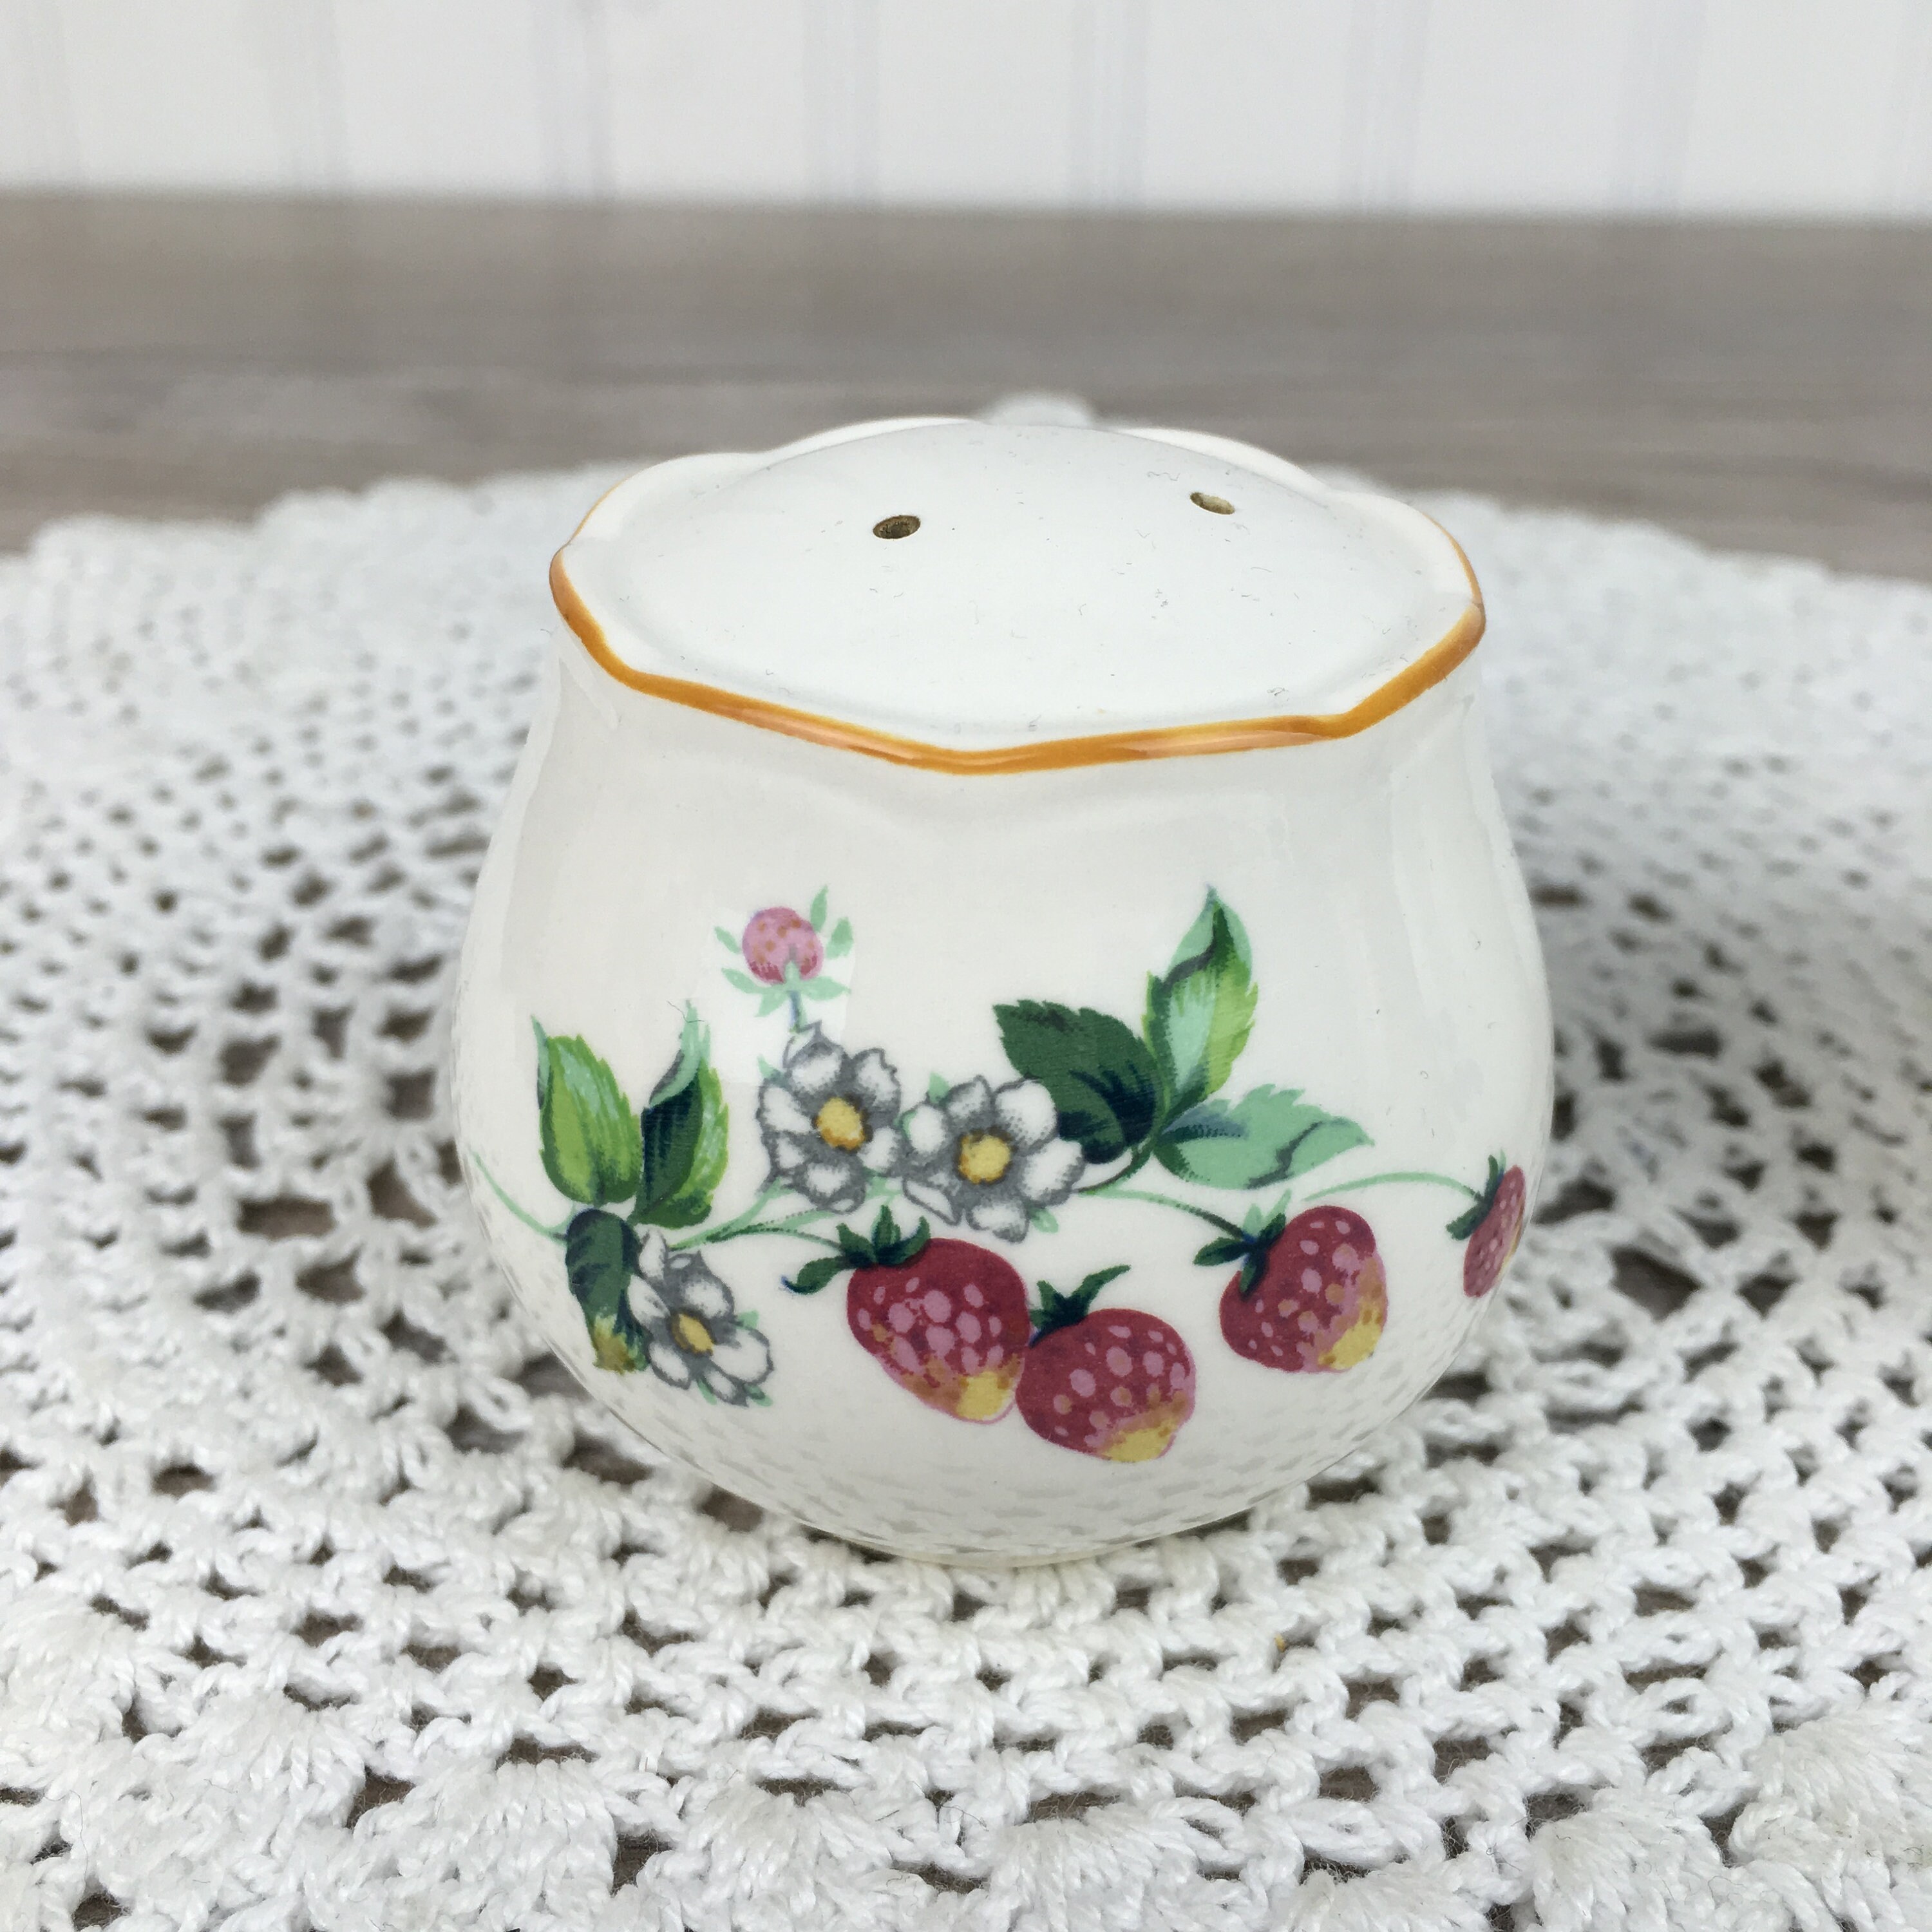 Vintage Salt Pepper Shaker Set, White Ceramic With Strawberries &  Blackberries Design, Salt and Pepper Shakers, Country Kitchen Decor, Japan  